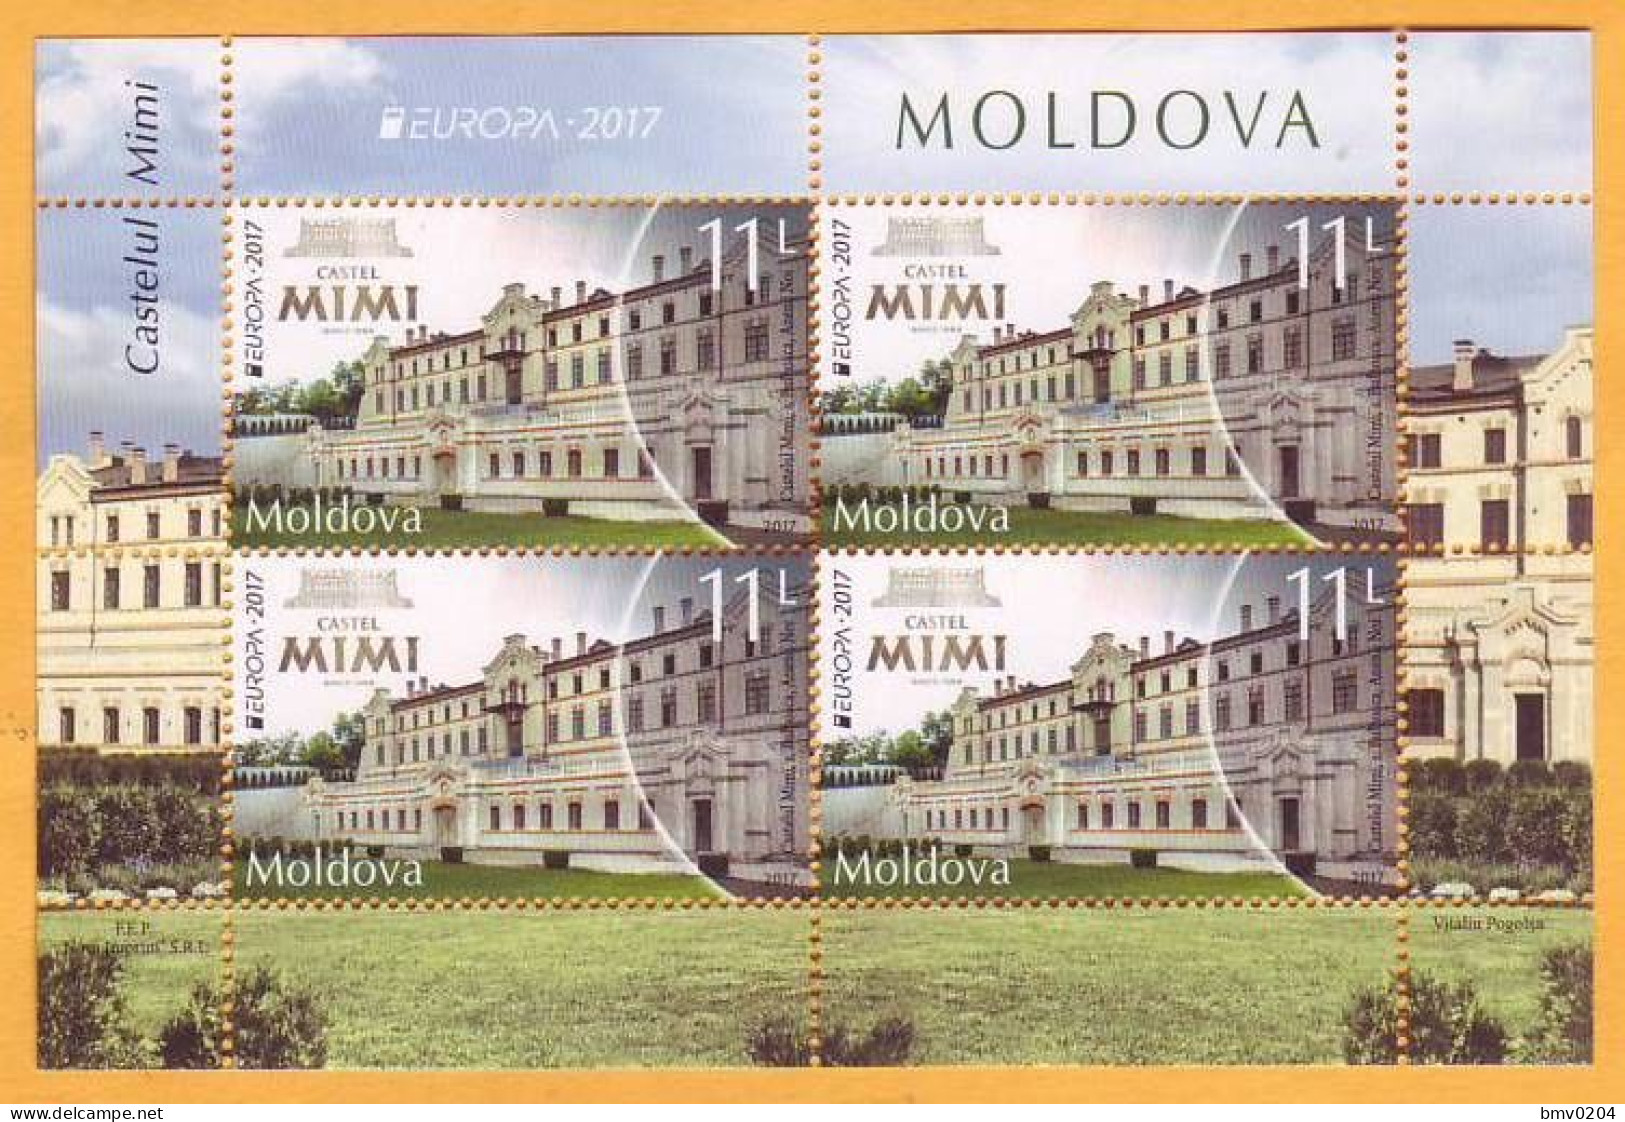 2017 Moldova Moldavie Moldau H-Blatt Europa - Cept  Castle. Mimi. Bulboaca - 2017